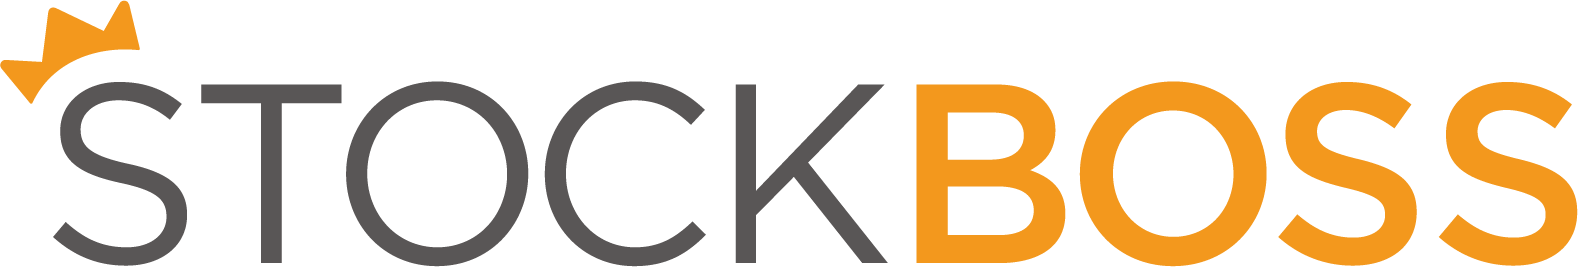 STOCKBOSS Logo